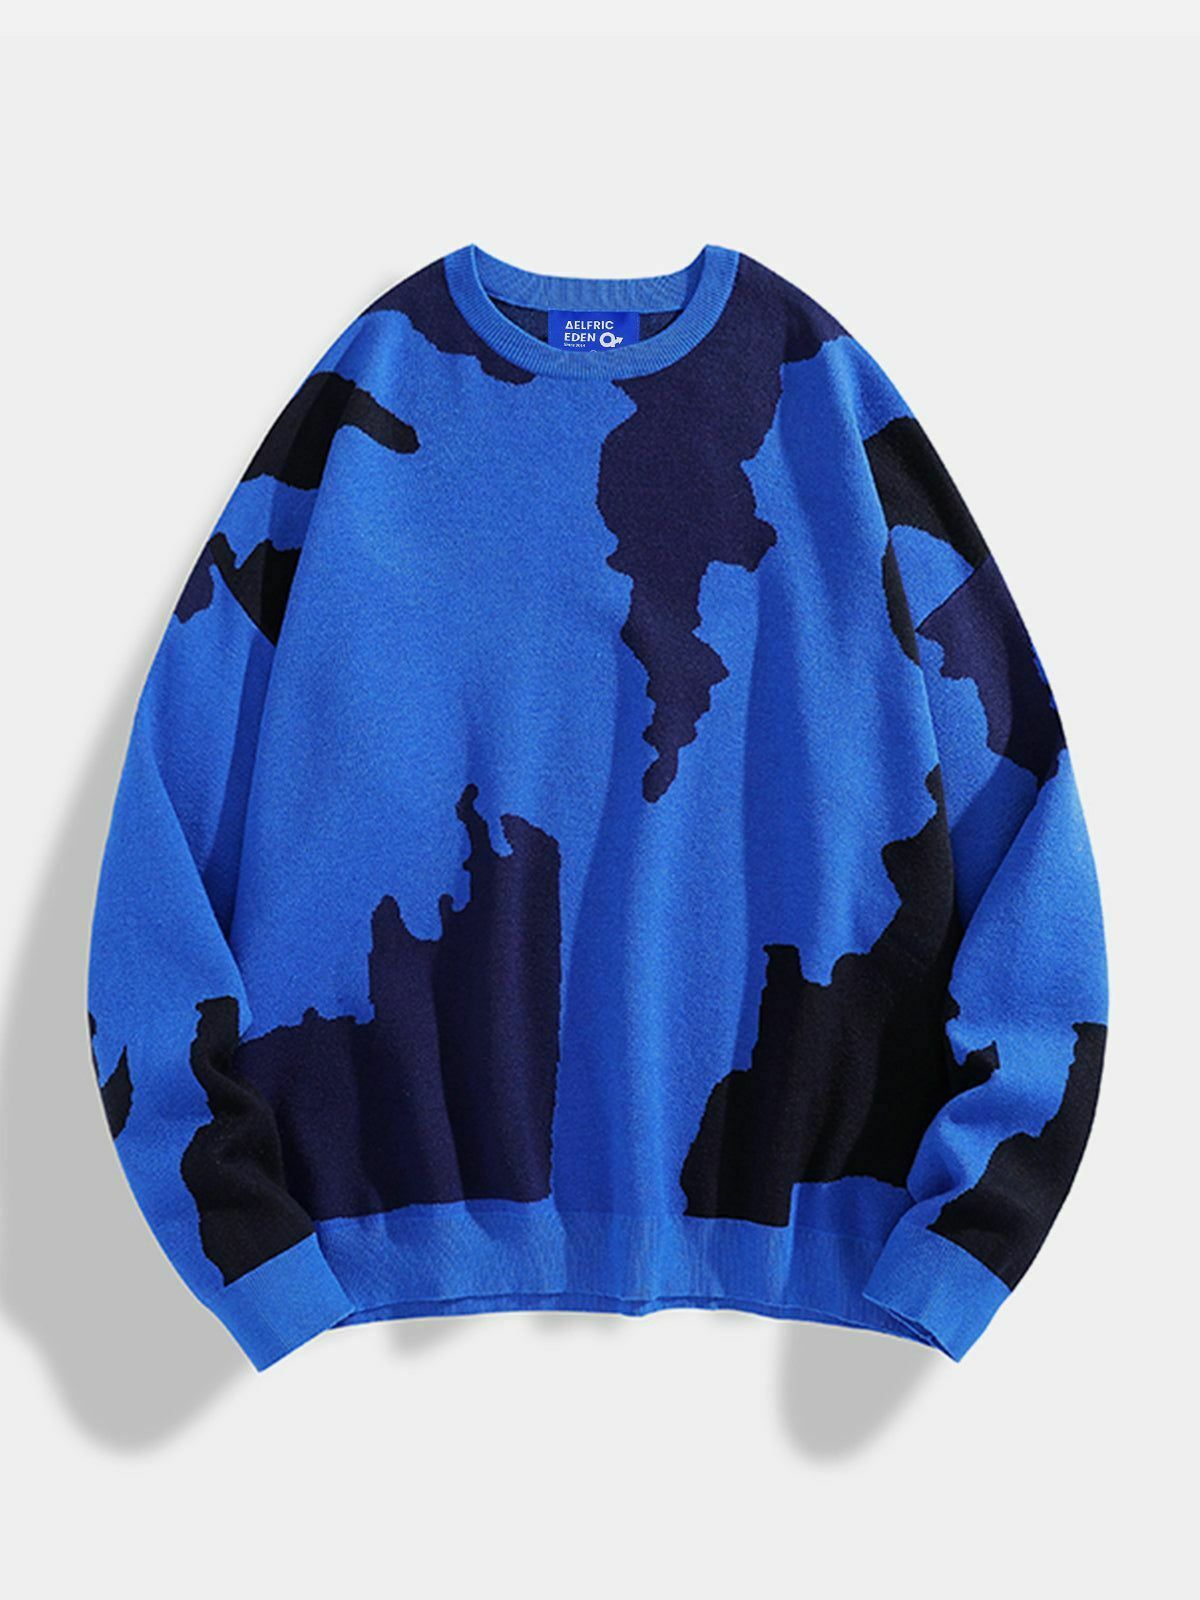 urban camo block sweater   edgy & trending streetwear 7114